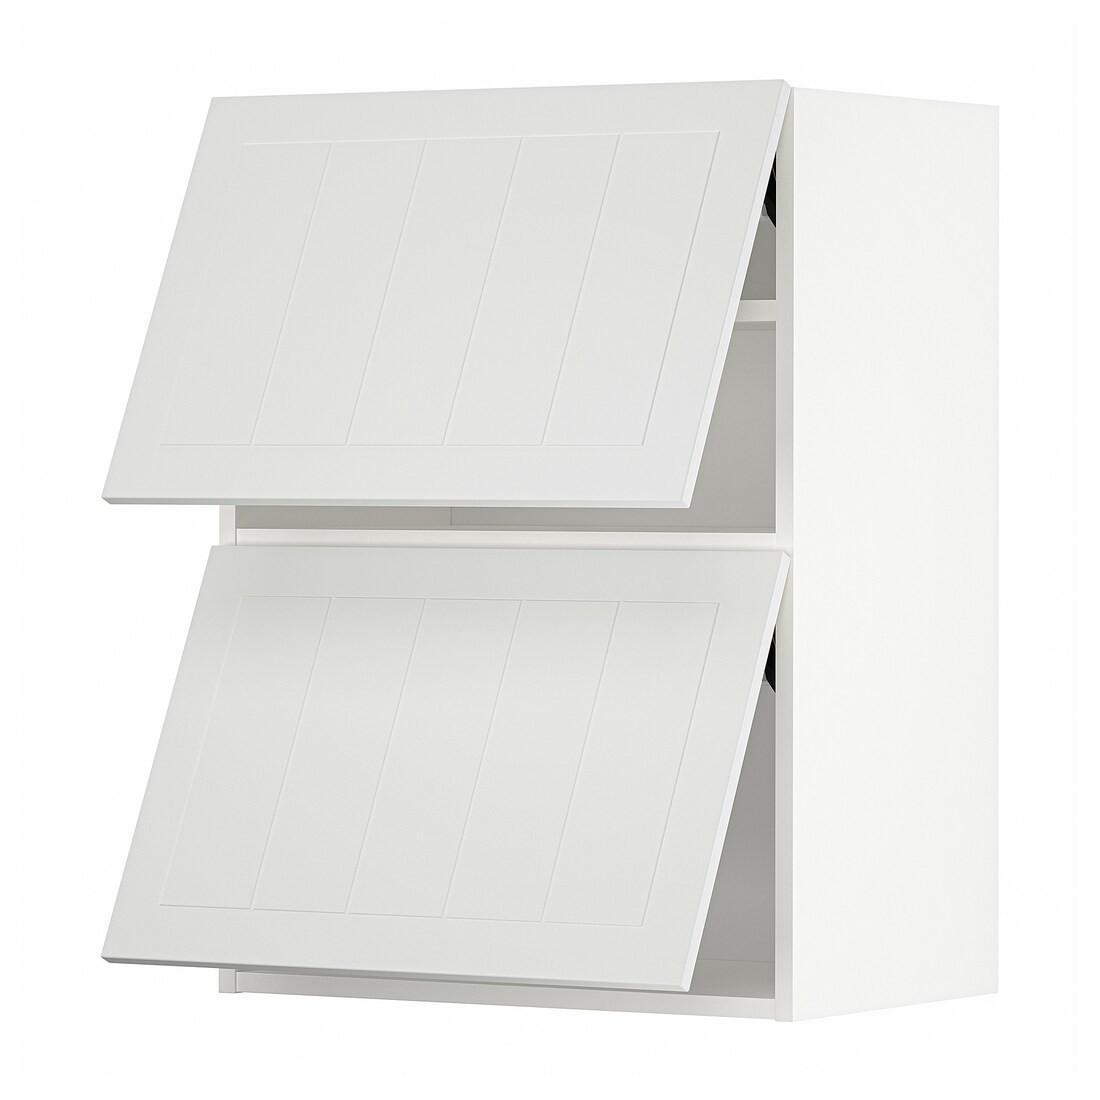 METOD МЕТОД Навесной горизонтальный шкаф / 2двери, нажимной механизм, белый / Stensund белый, 60x80 см